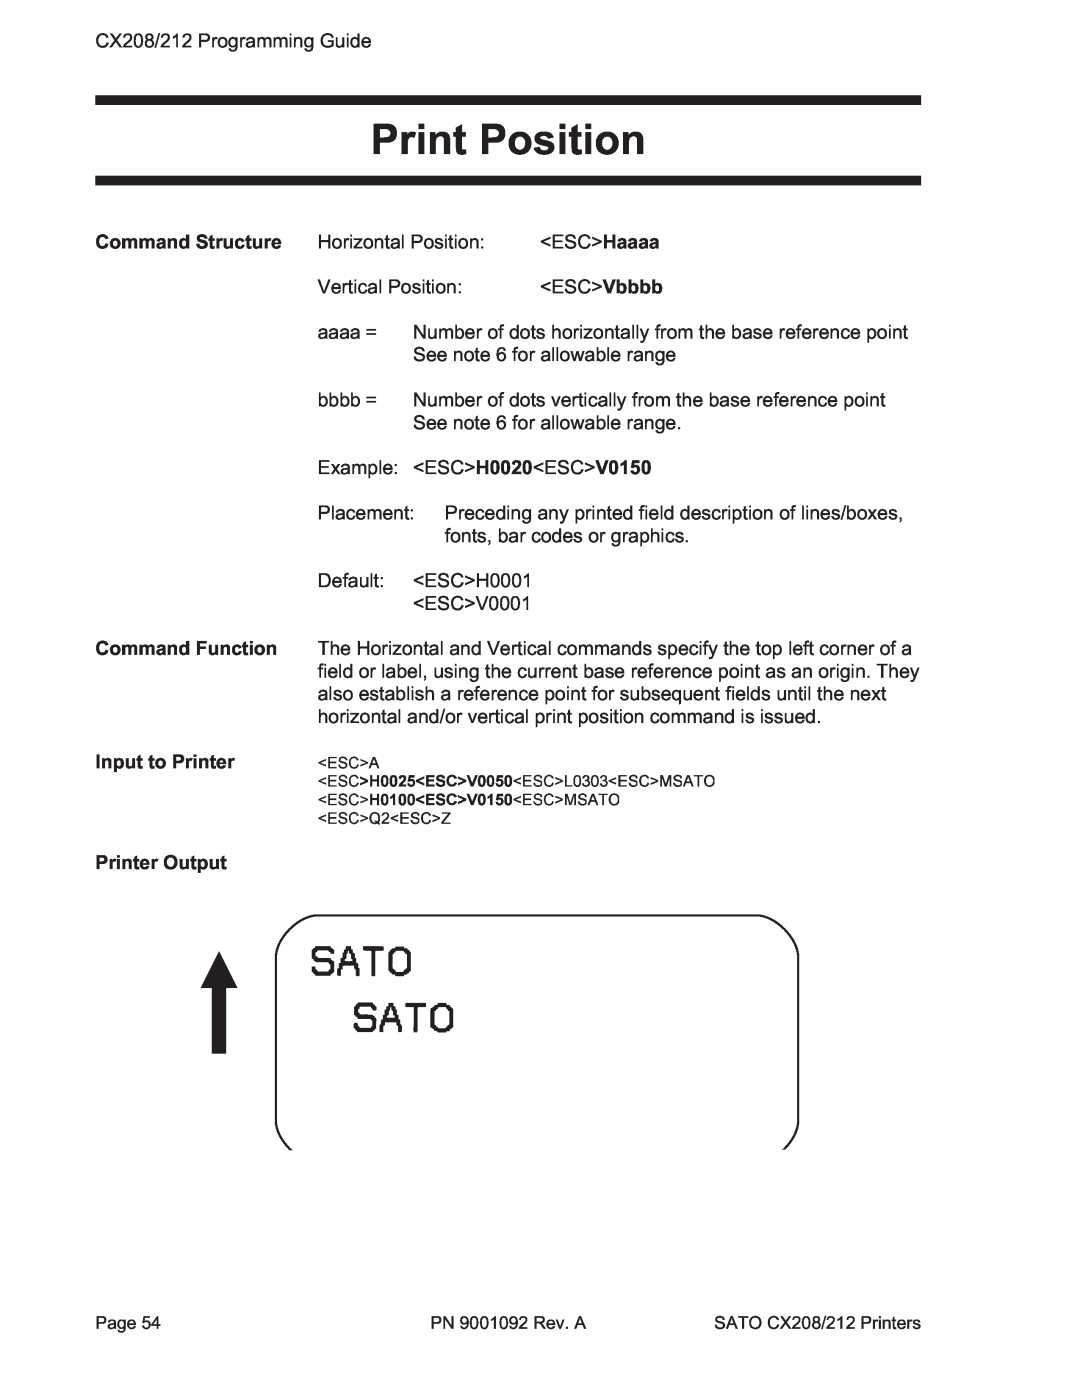 SATO CX208/212 manual Print Position, ESCQ2ESCZAH0025100 0150ESCL0303ESCMSATO 